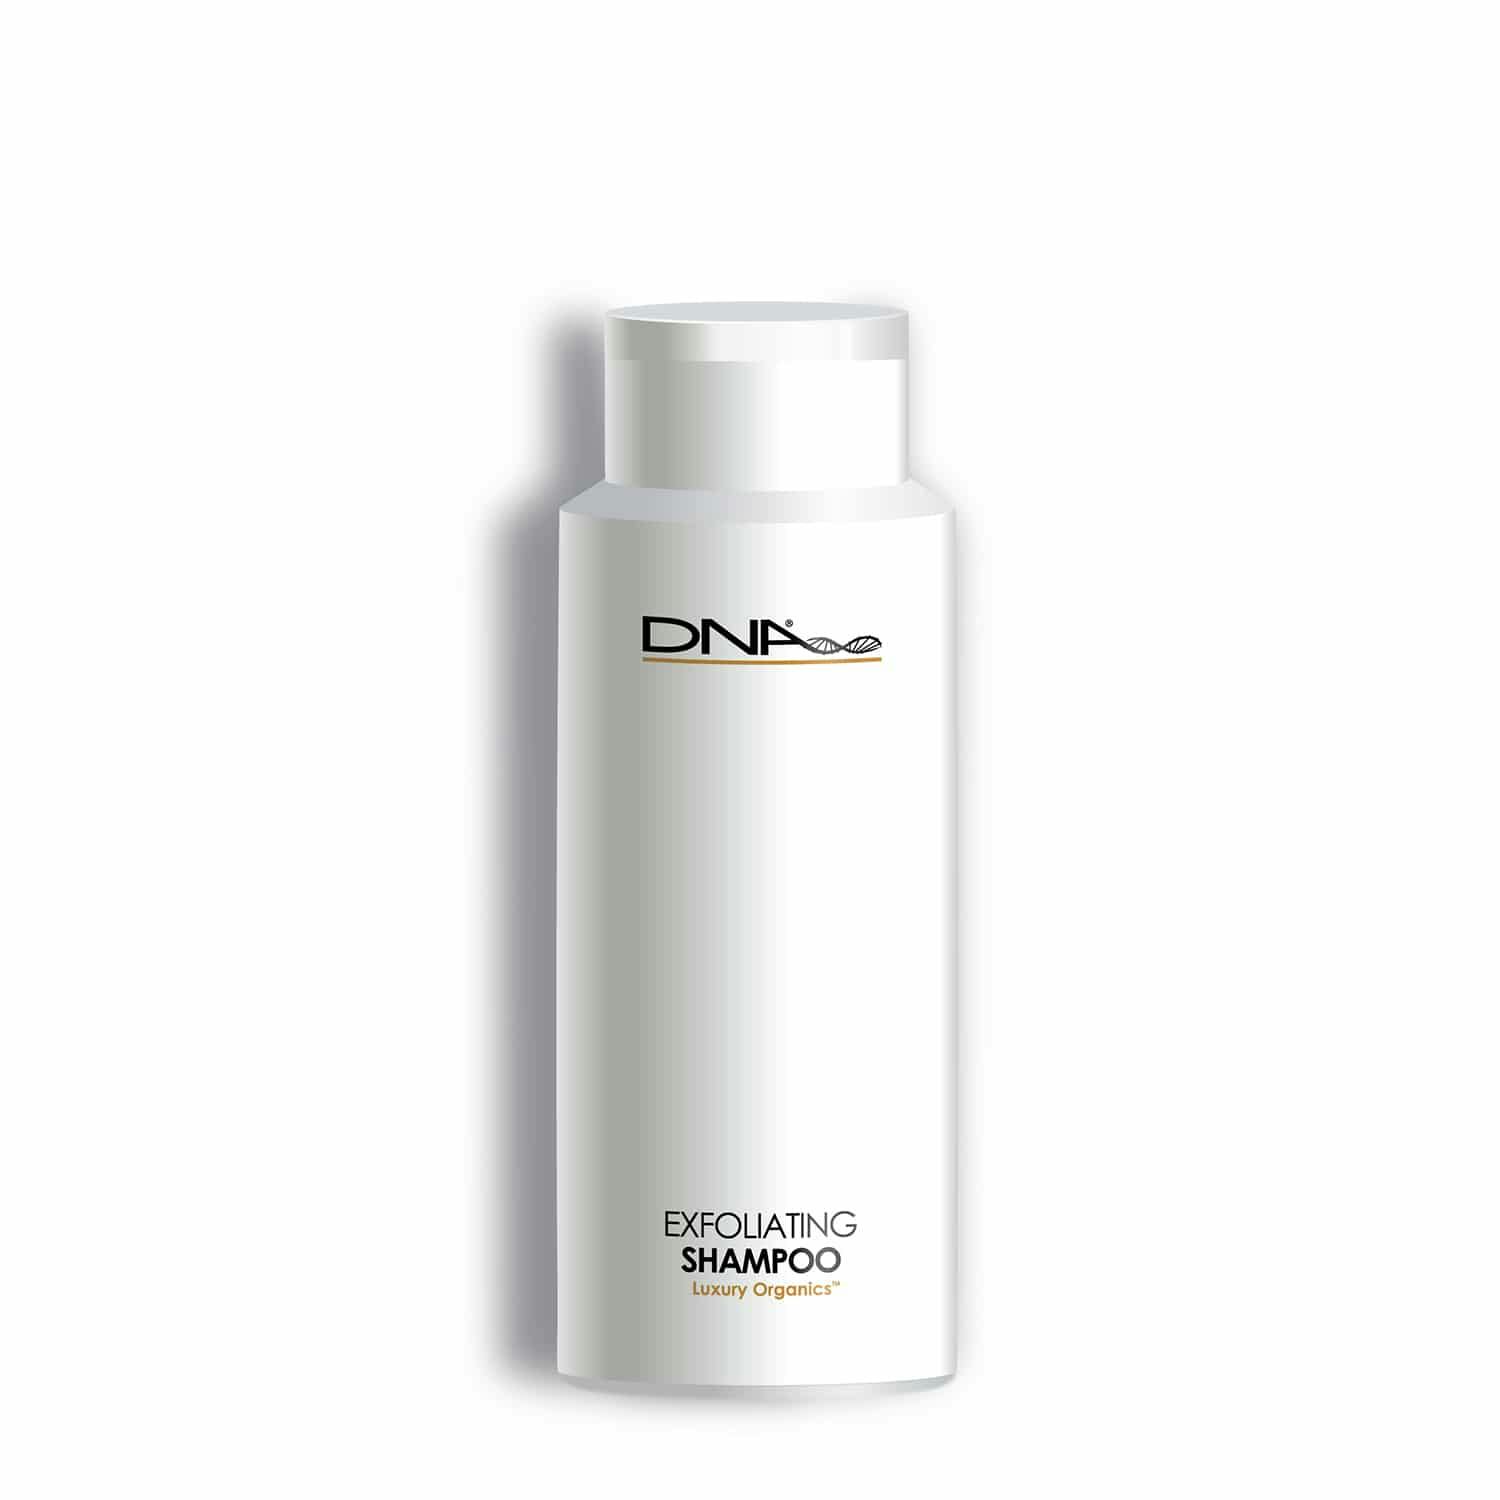 White Label Shampoo - Made in Australia image 1